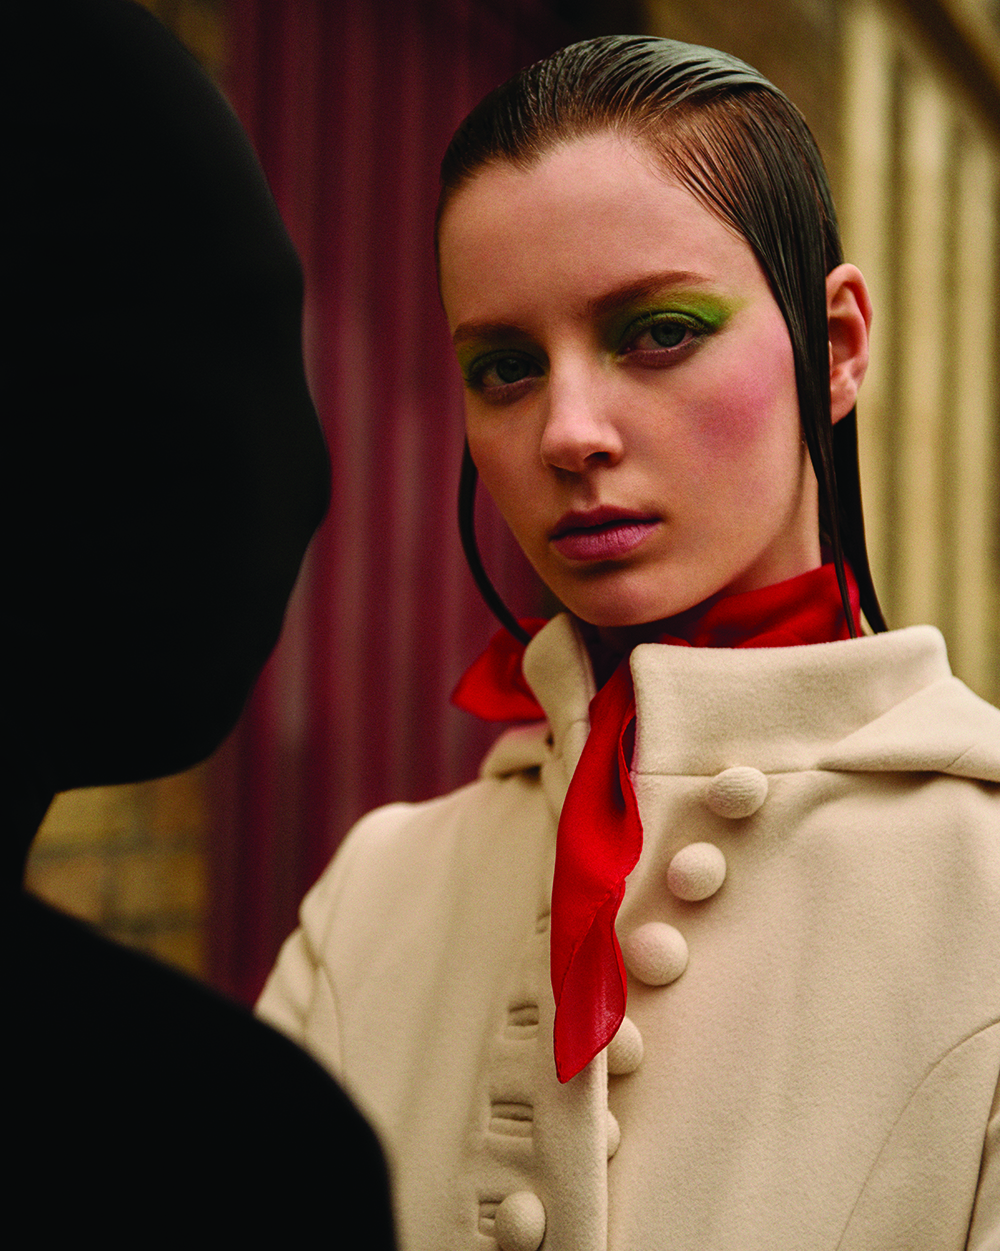 Beige wool coat by Gucci, scarf stylist's own